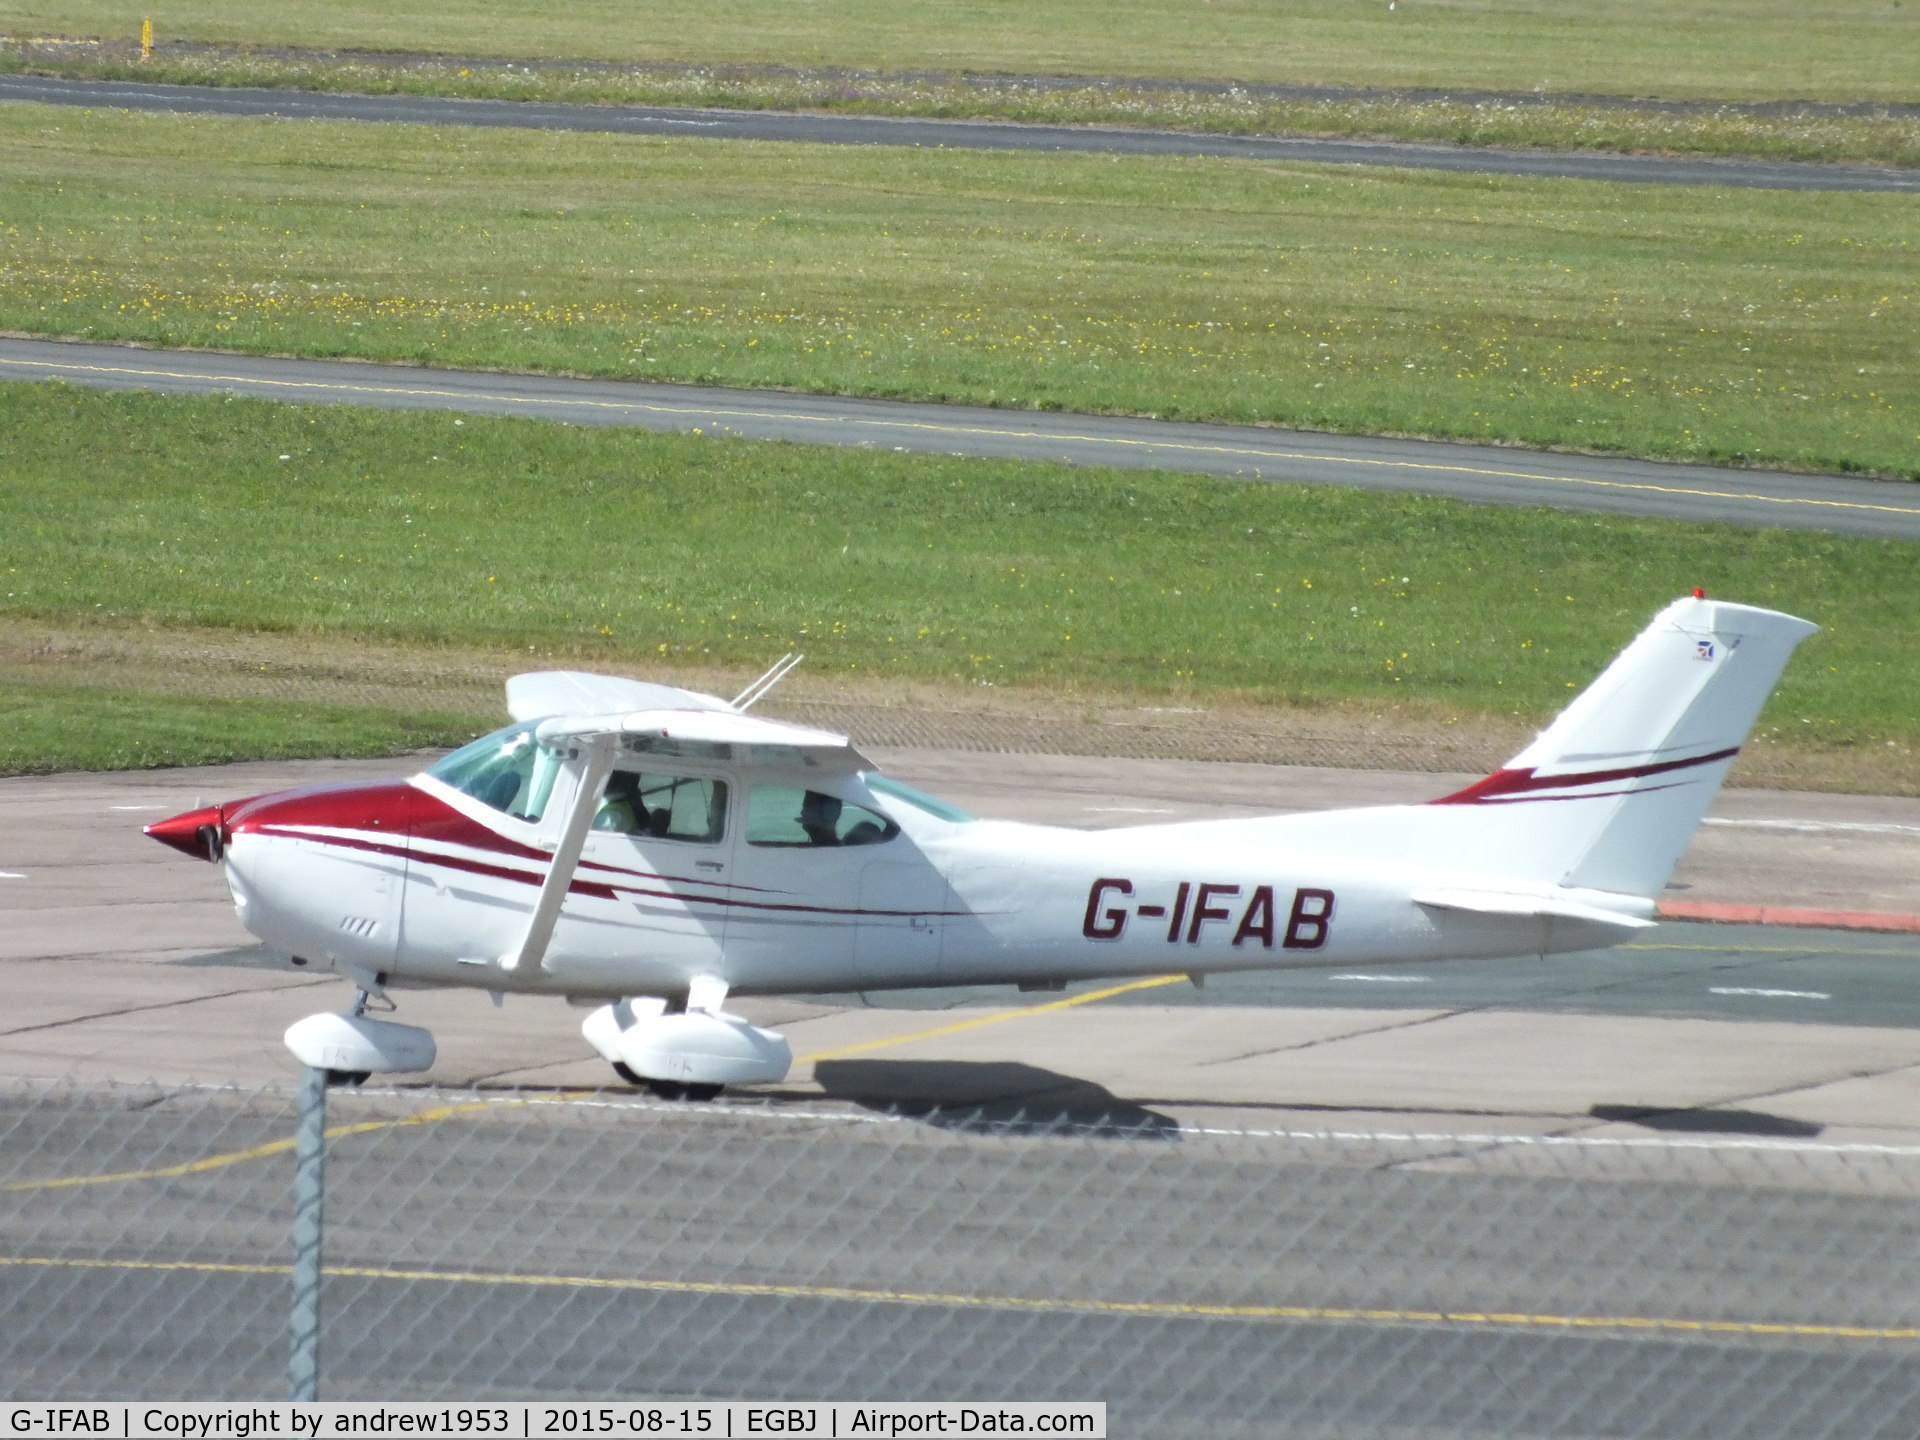 G-IFAB, 1979 Reims F182Q Skylane C/N 0127, G-IFAB at Gloucestershire Airport.